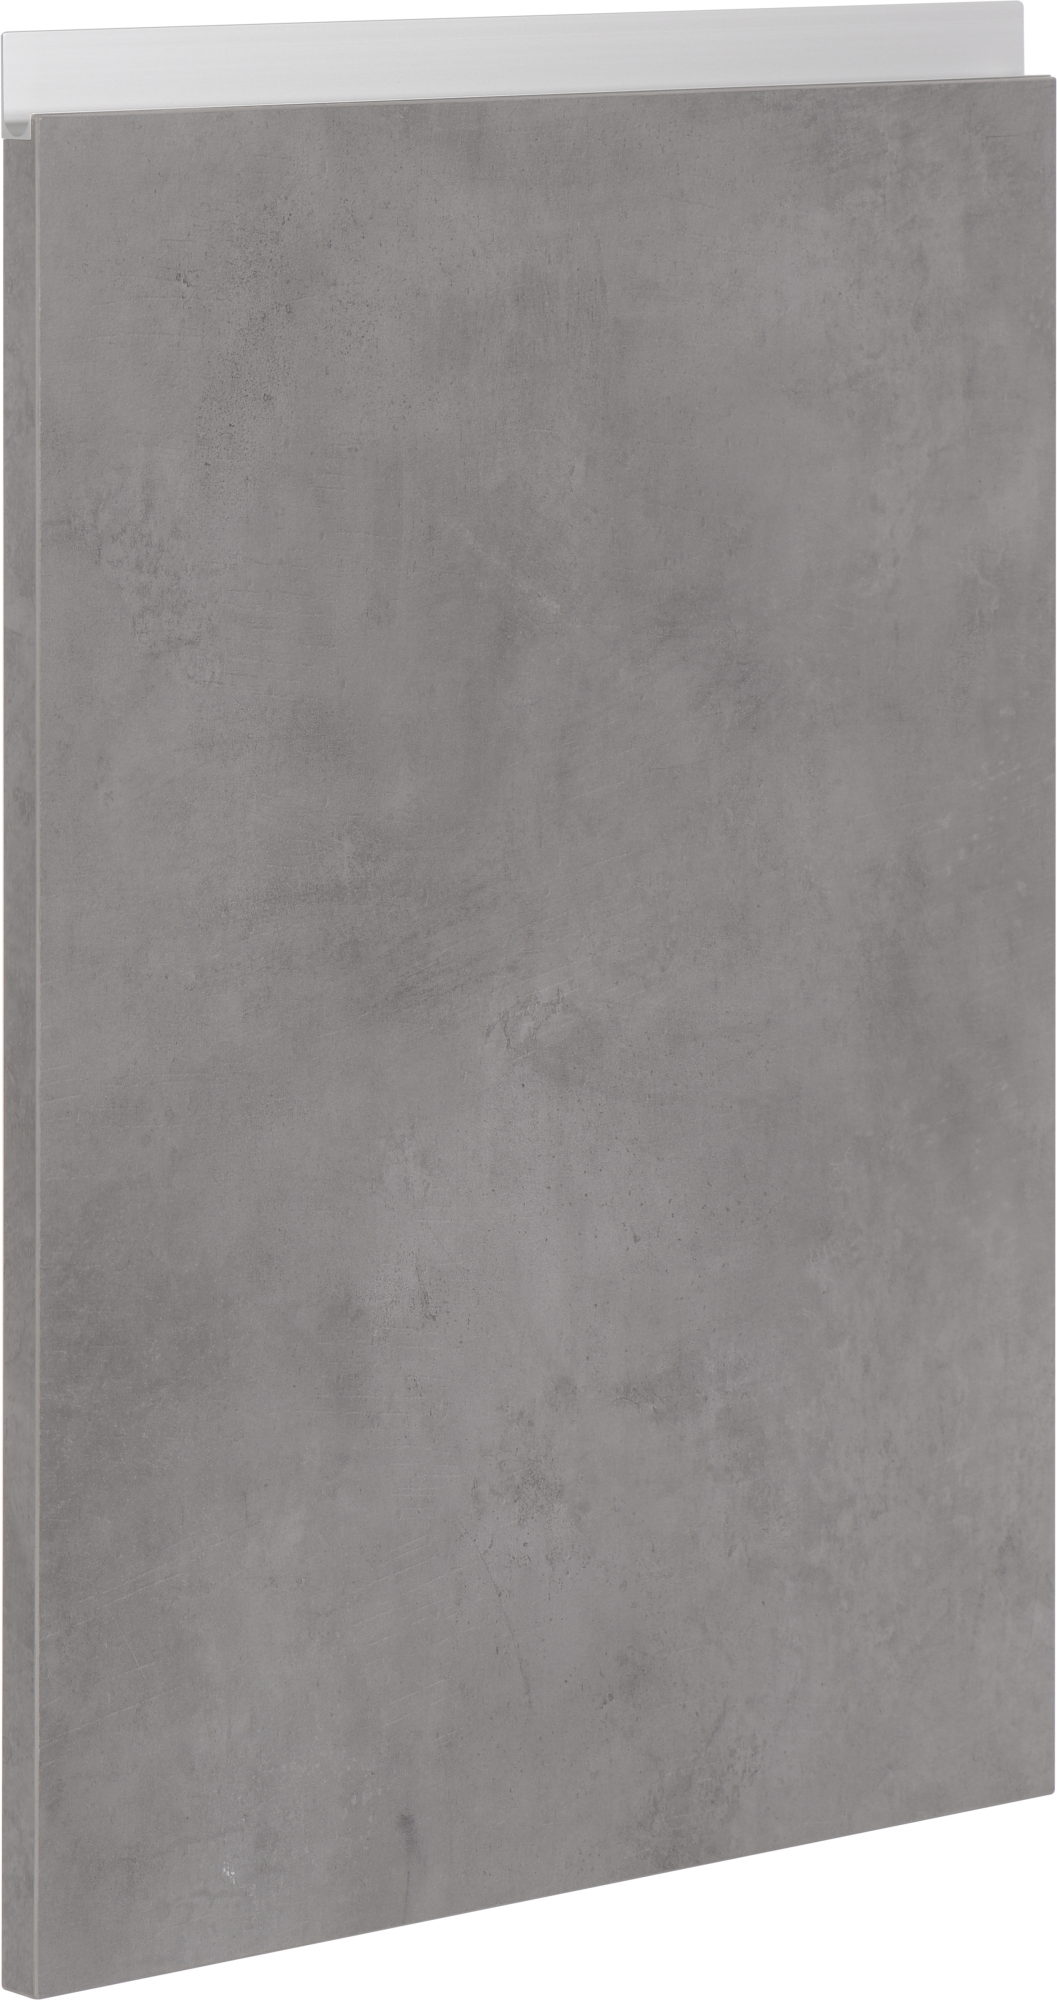 Puerta mueble de cocina mikonos cemento oscuro 44,7x63,7 cm